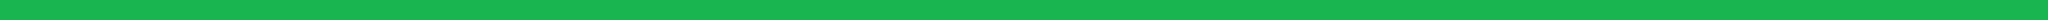 Banner verde, missione 2